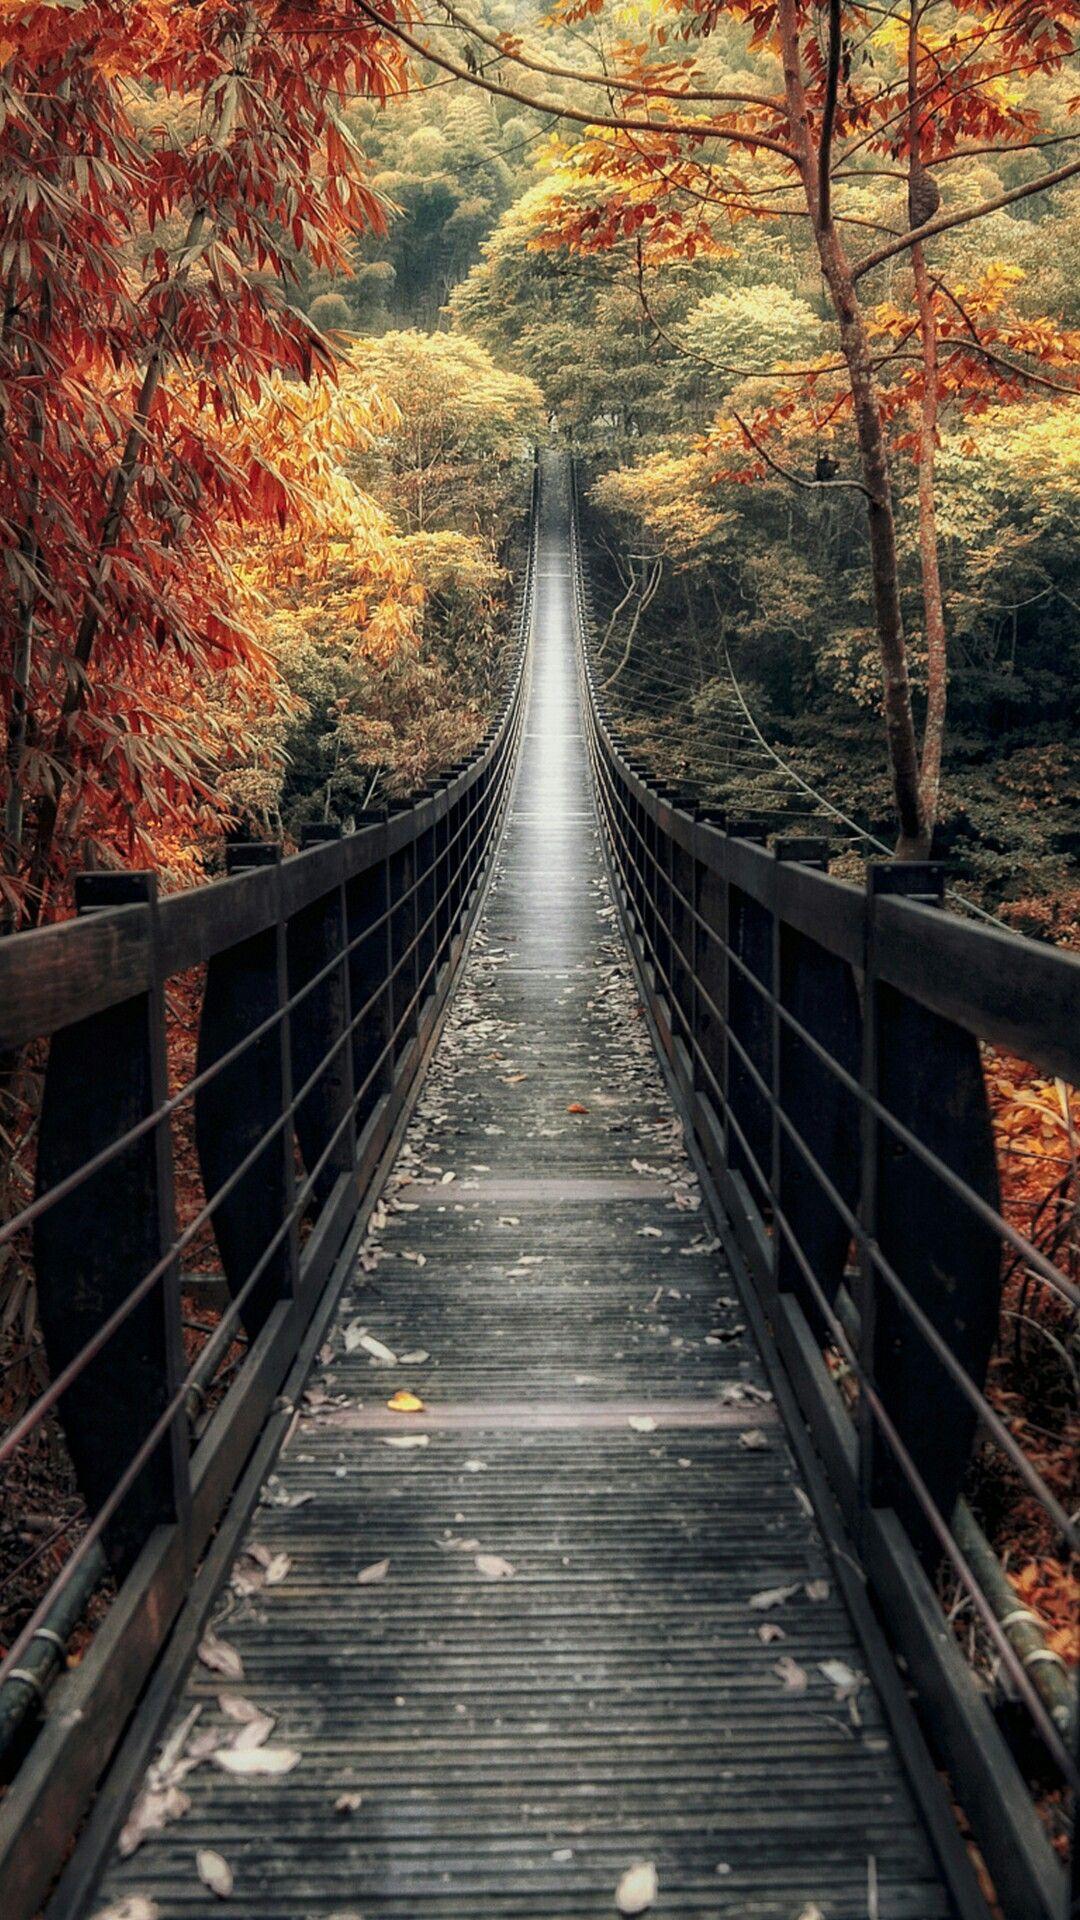 Bridge Walkway with Fall Trees from Zedge. Beautiful